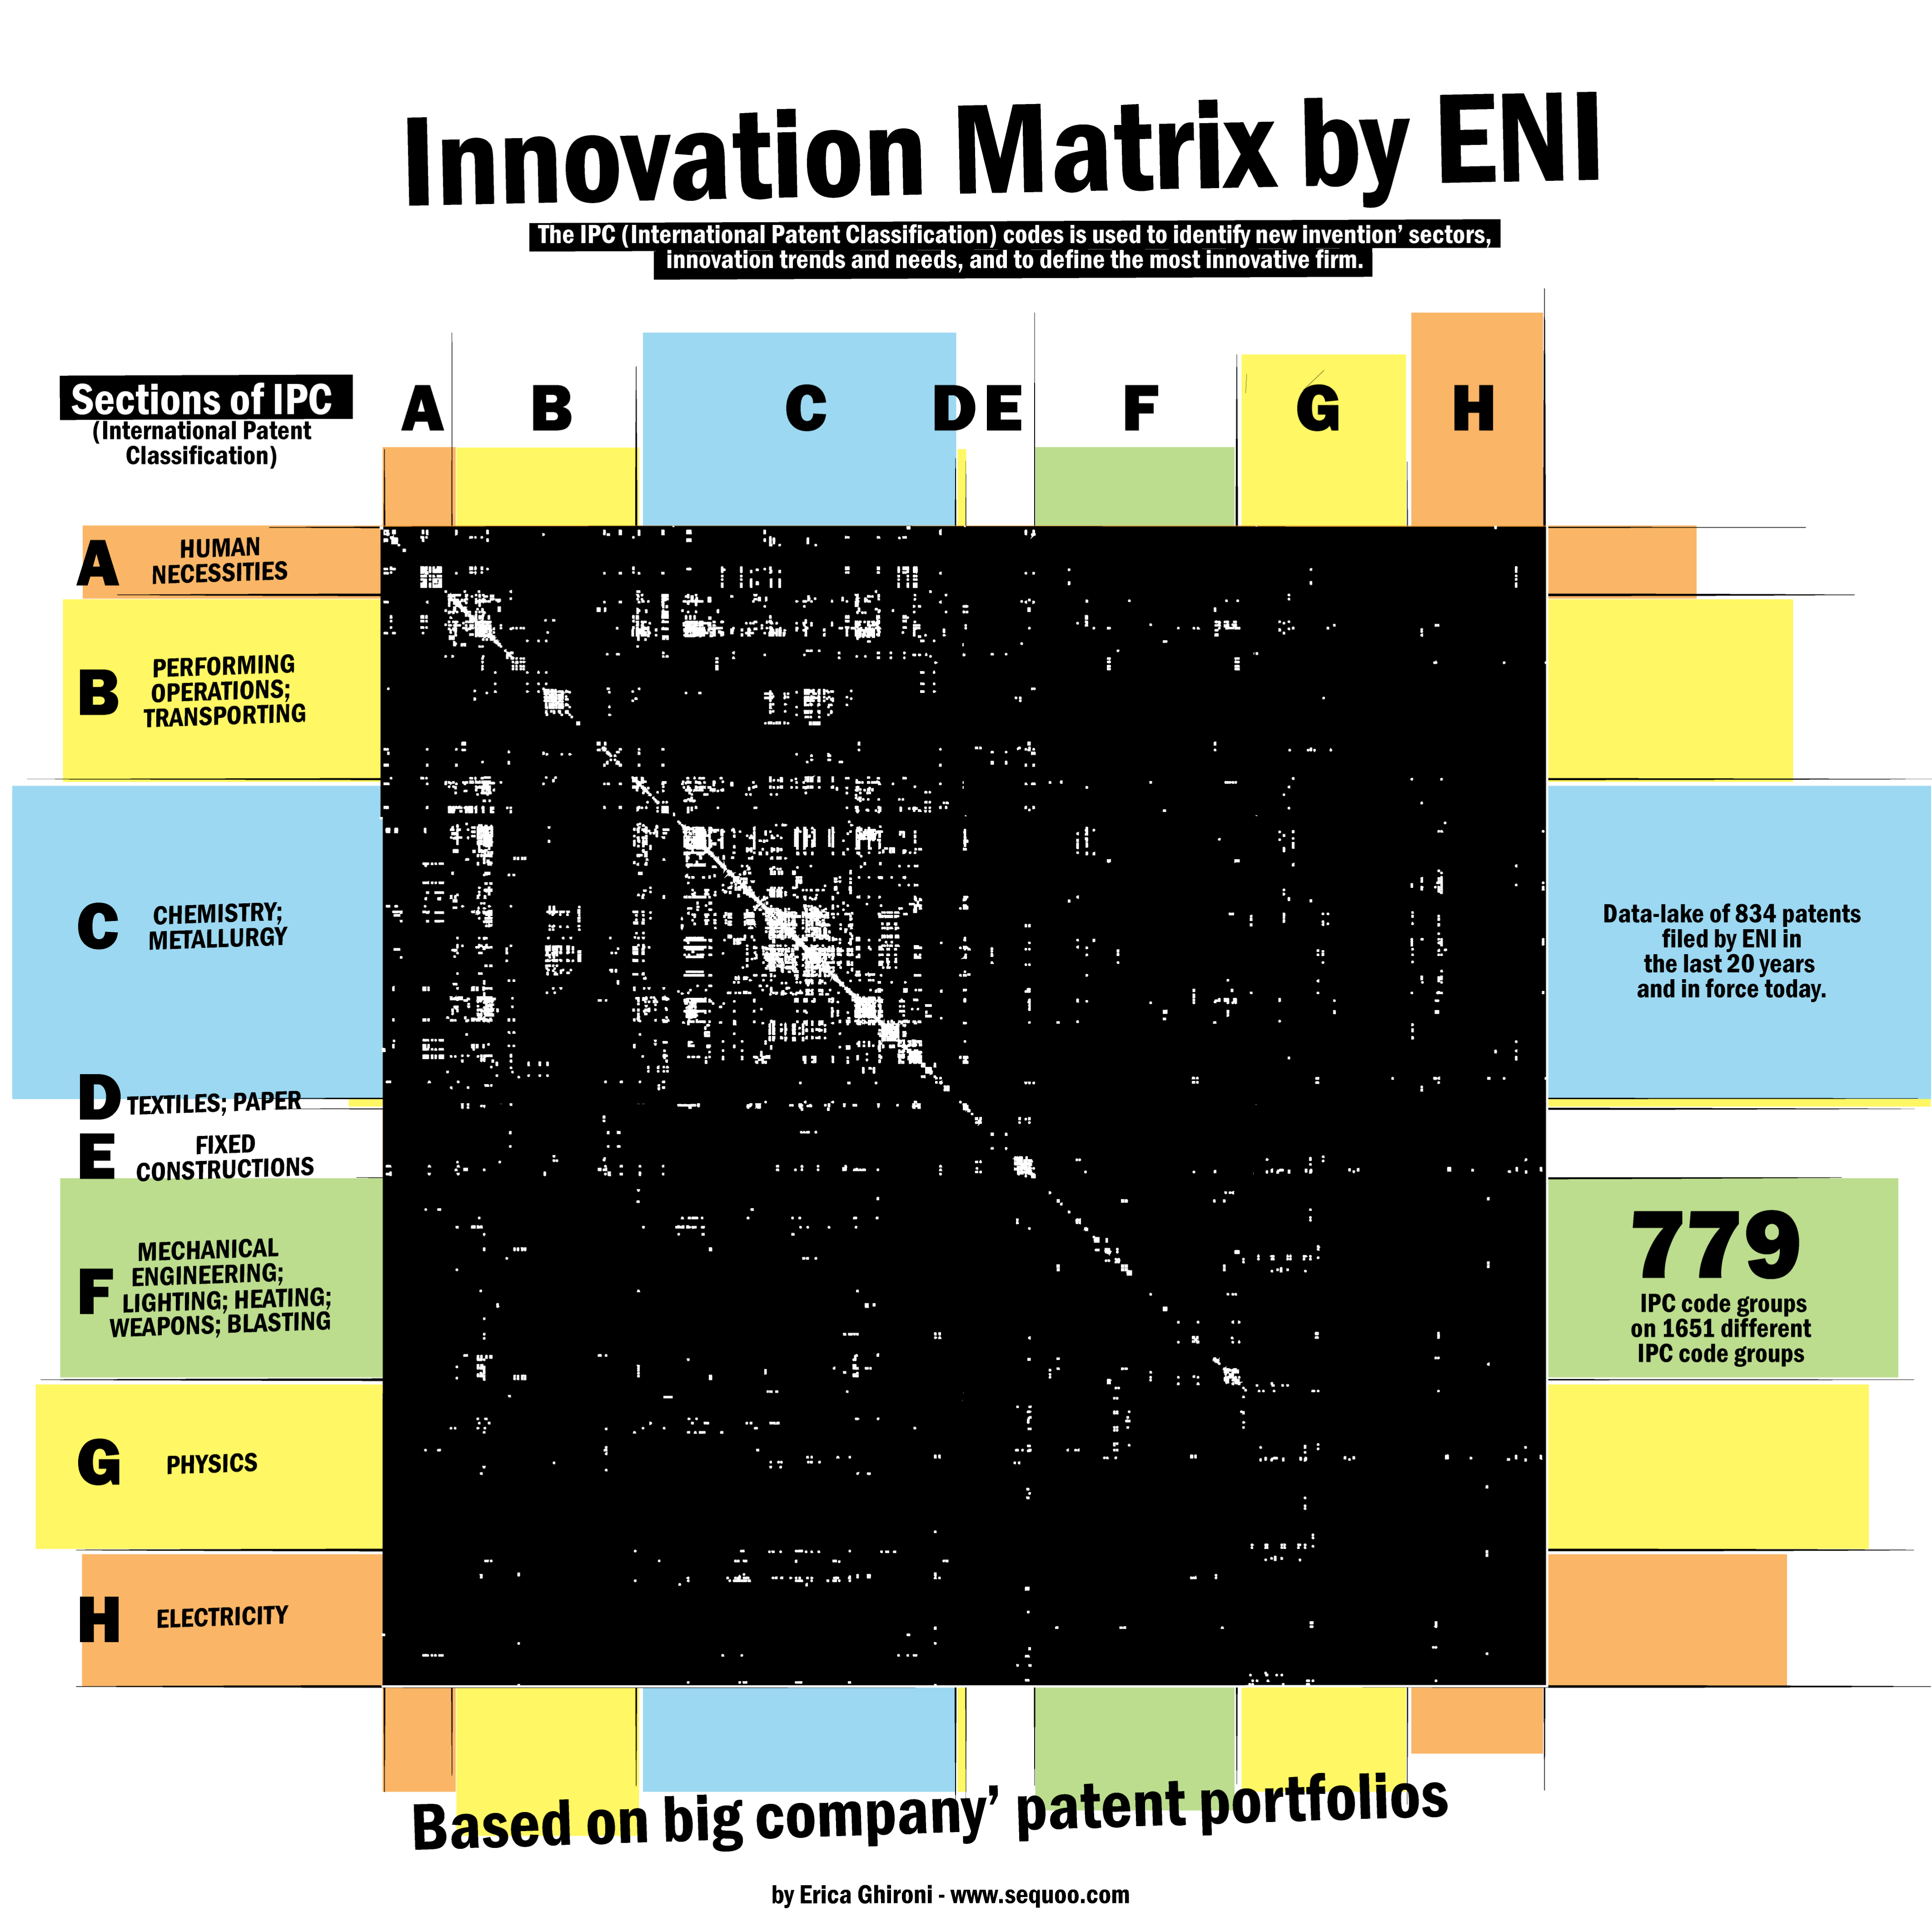 patent portfolio by ENI